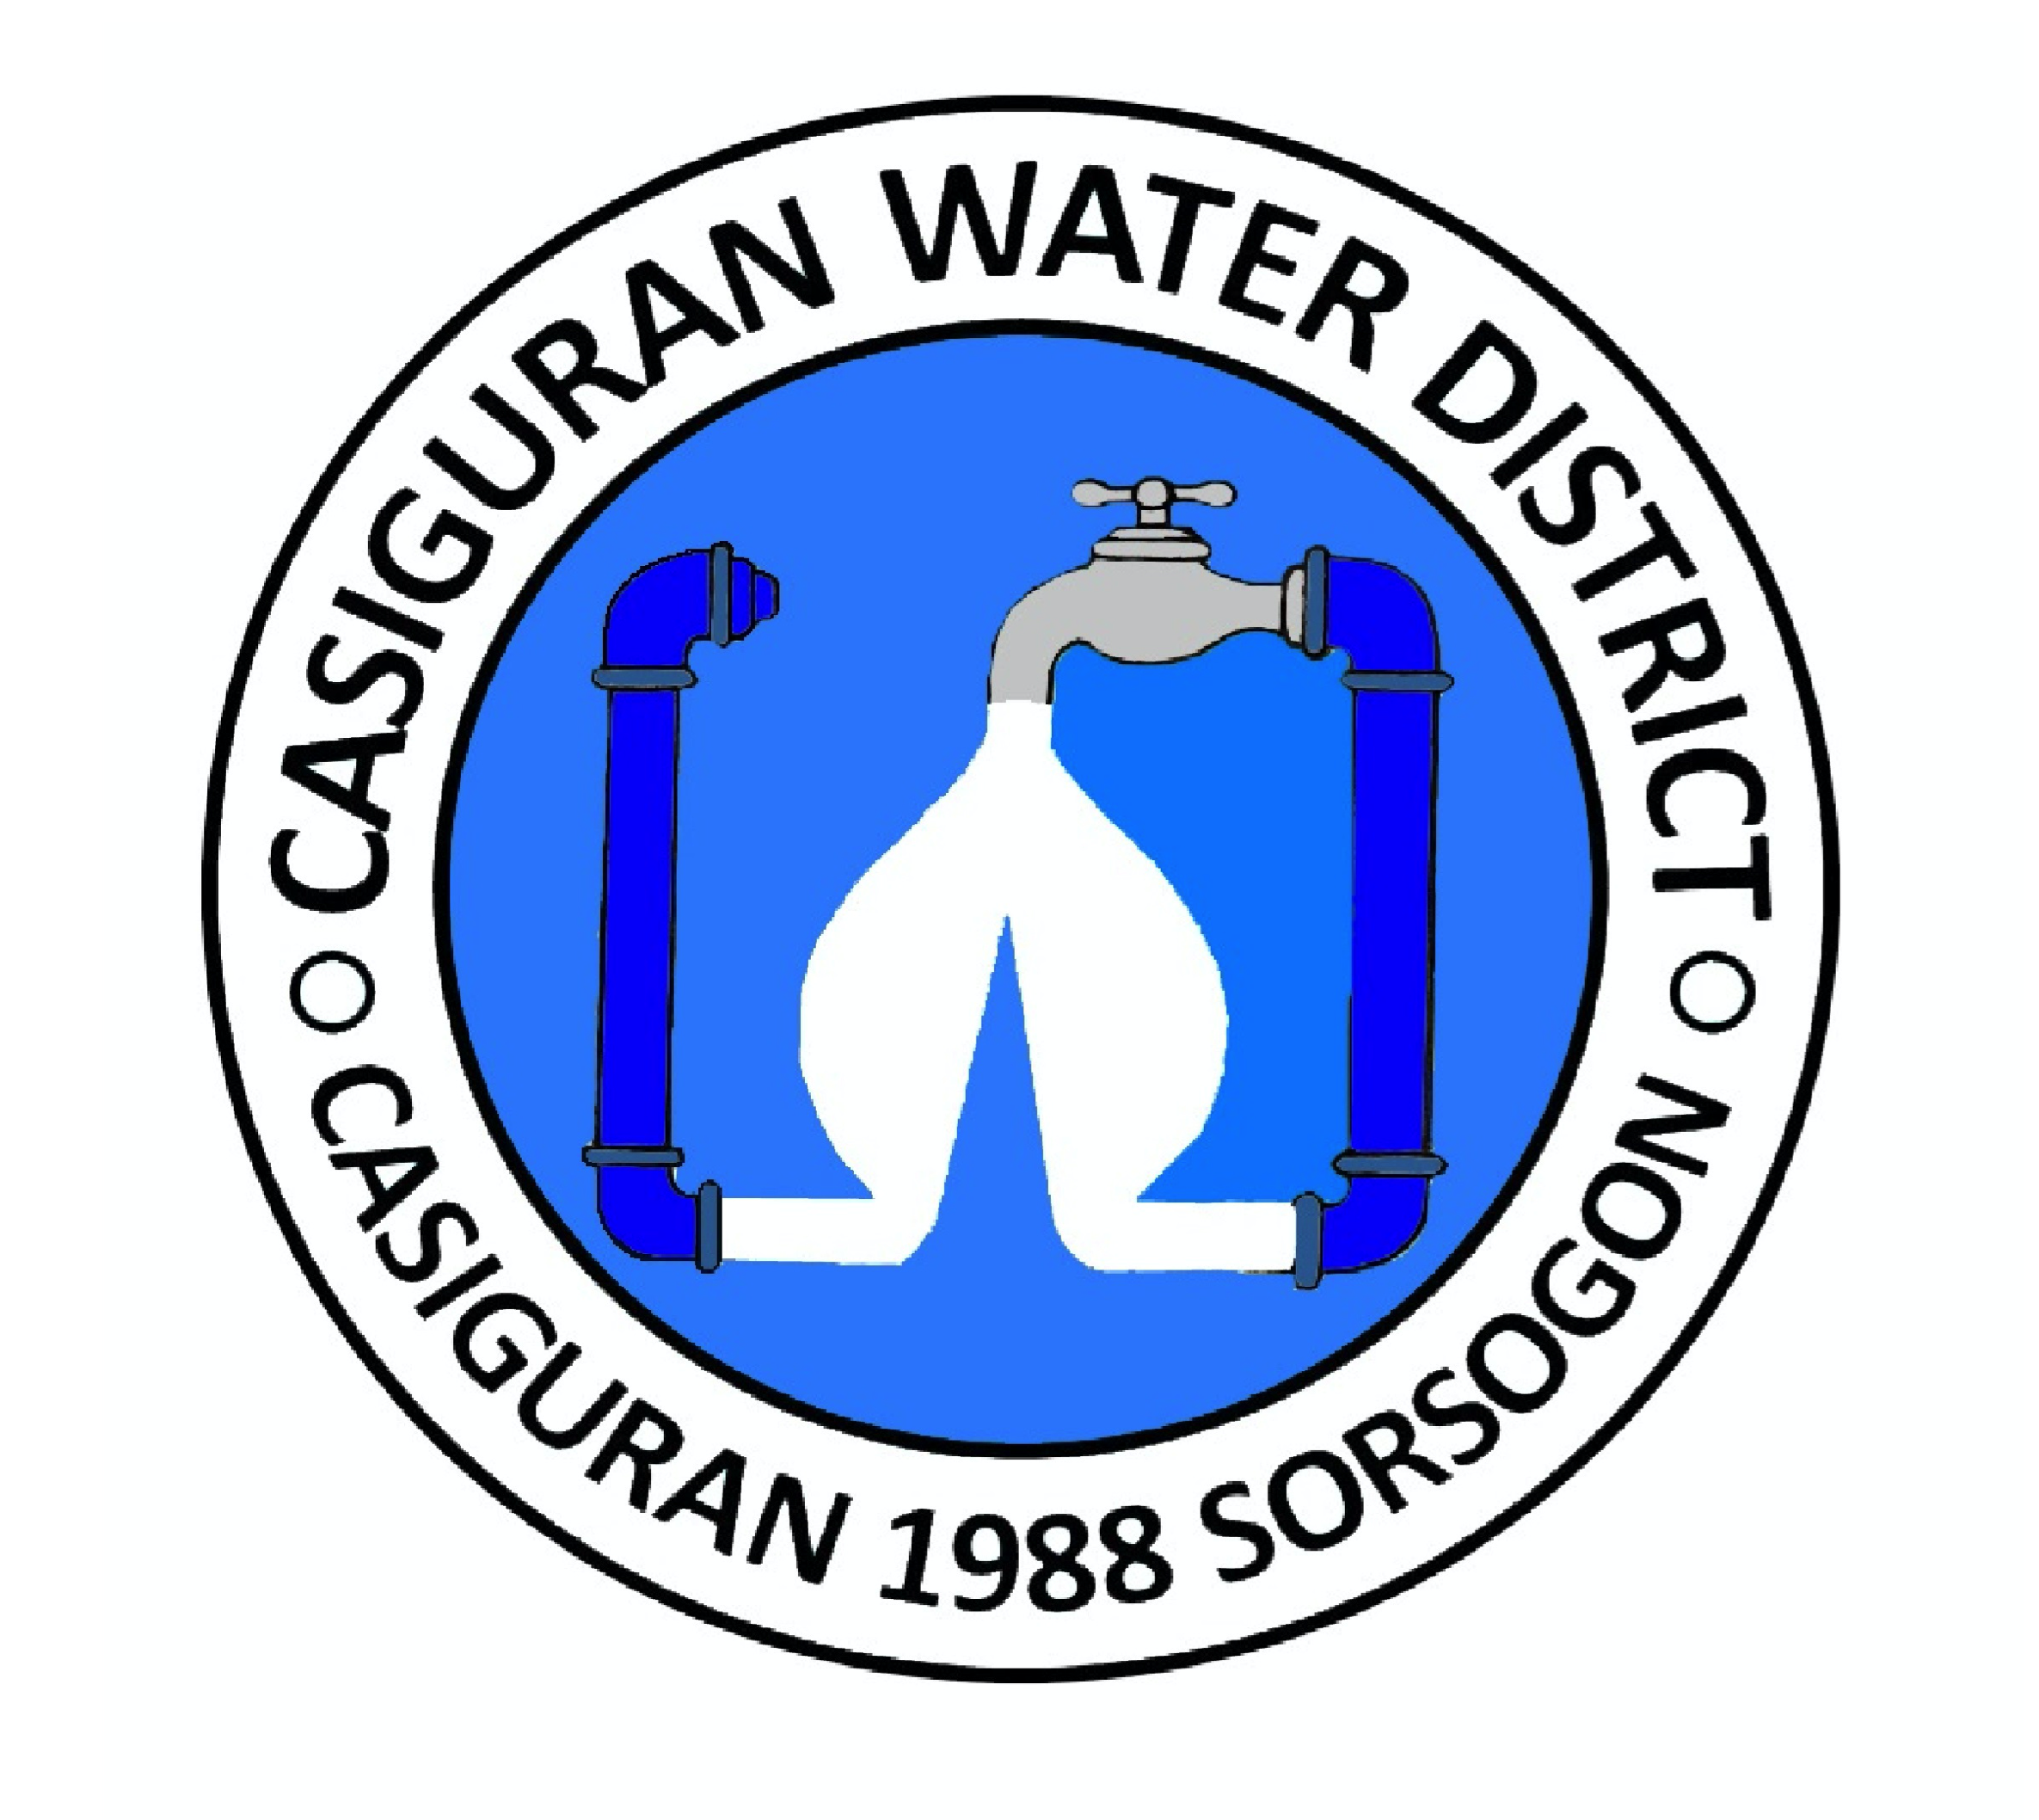 CASIGURAN WATER DISTRICT